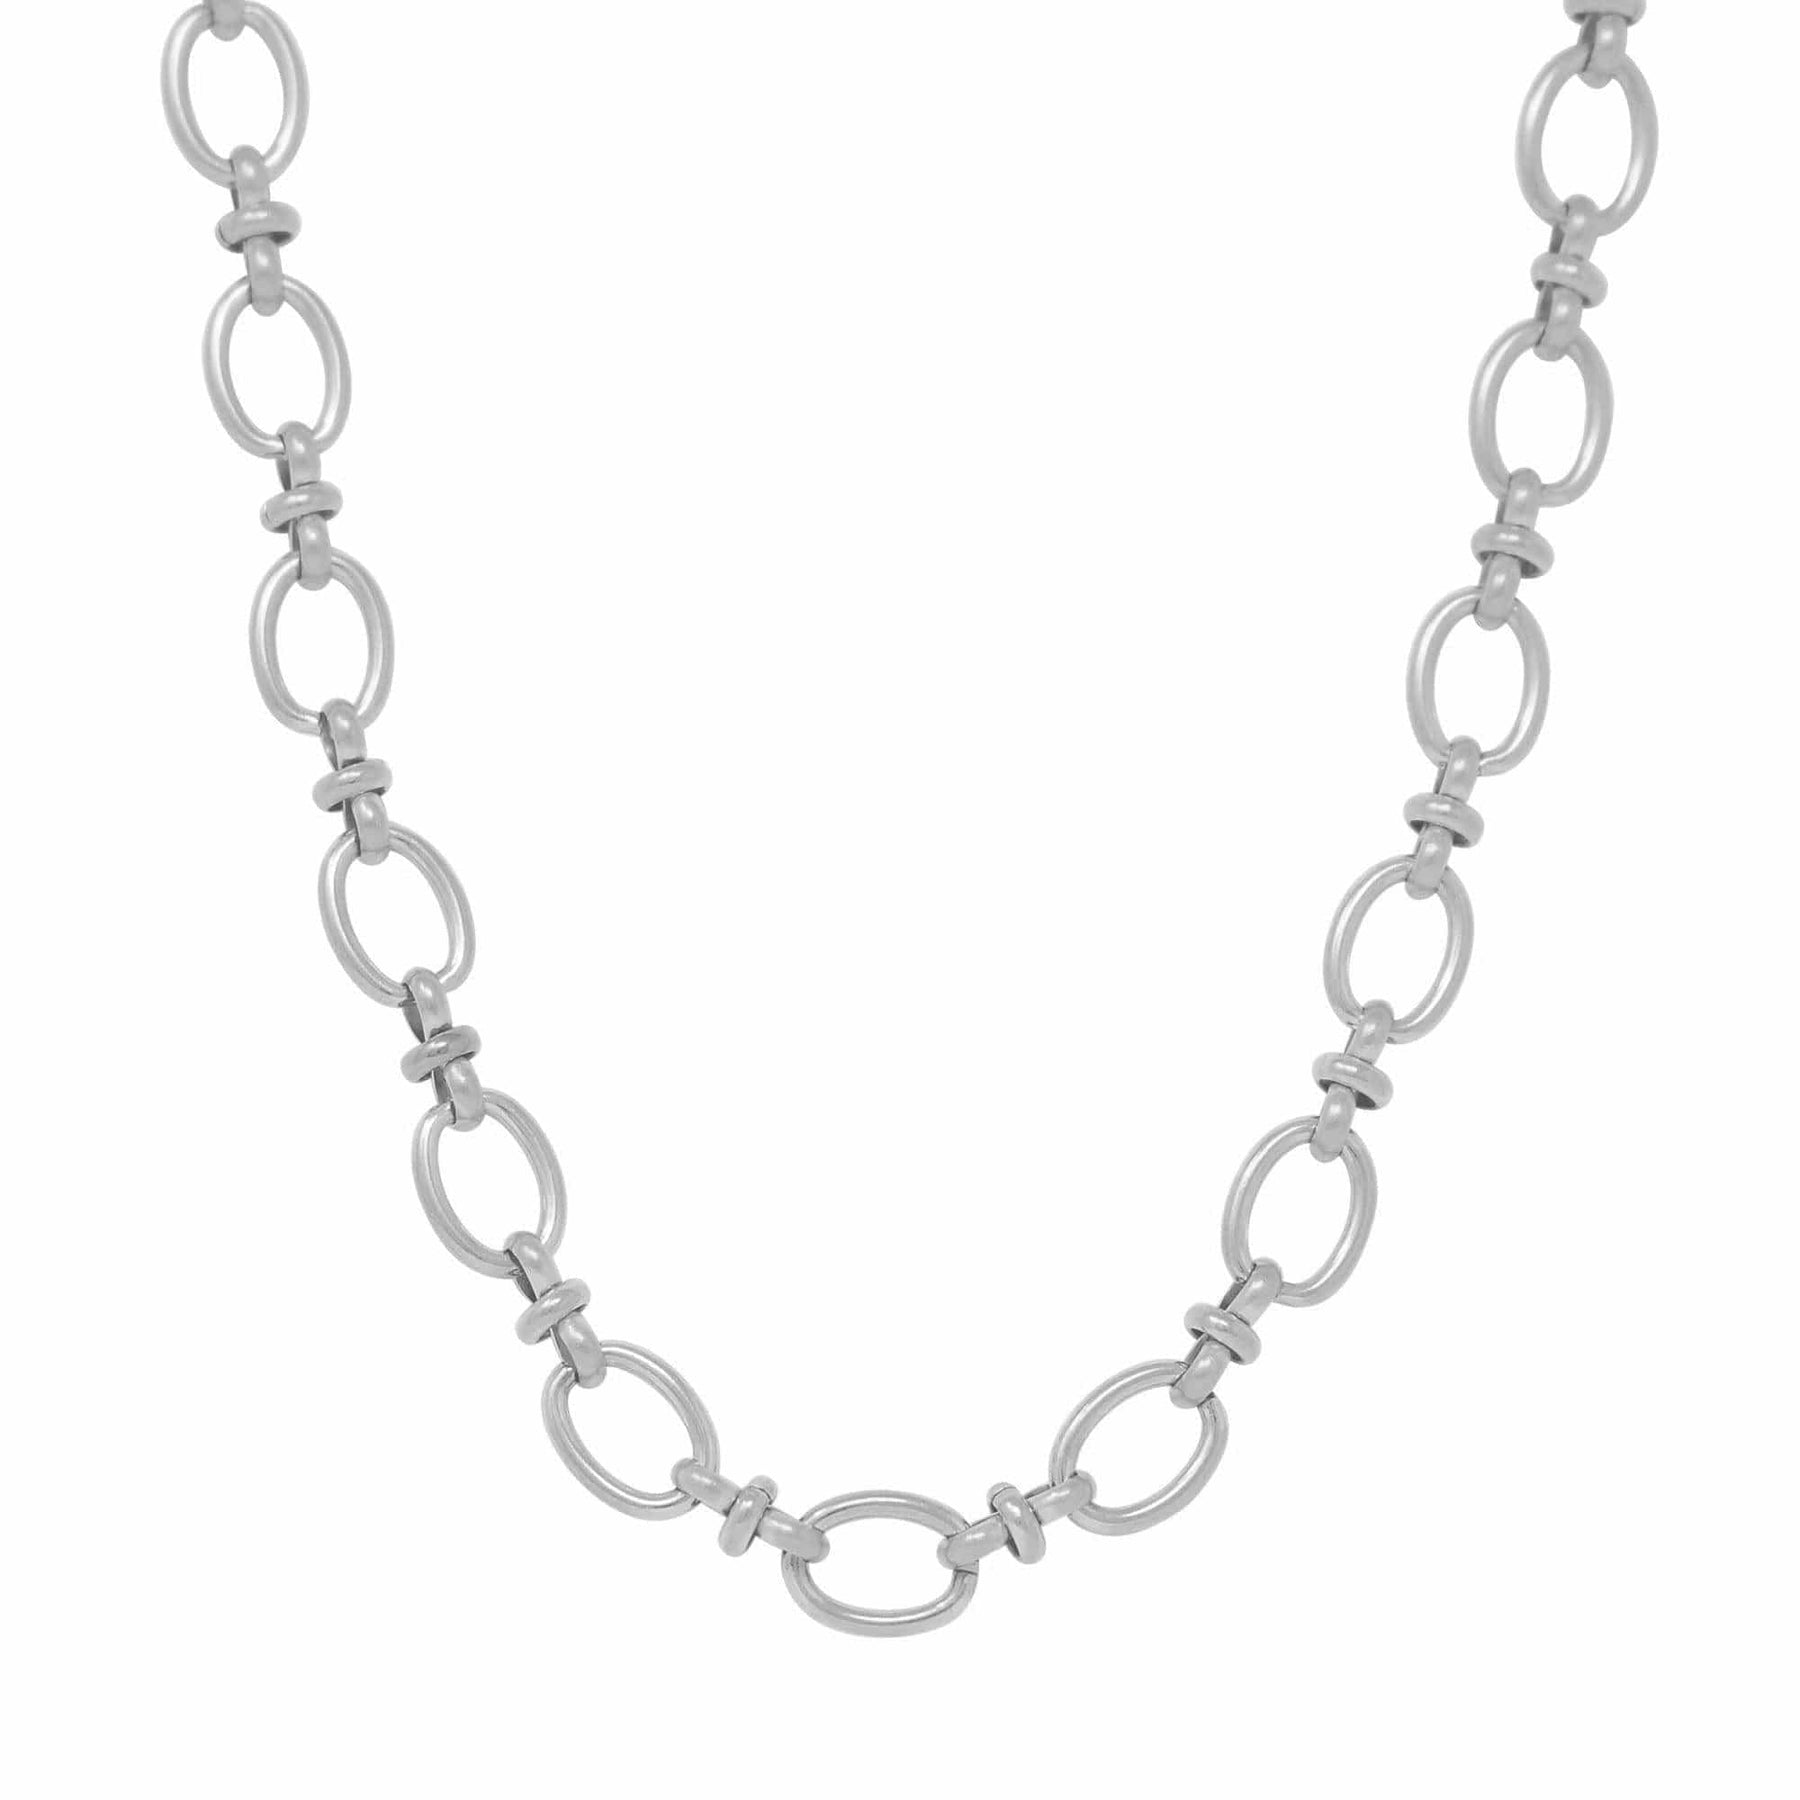 BohoMoon Stainless Steel Emmie Choker Chain Silver